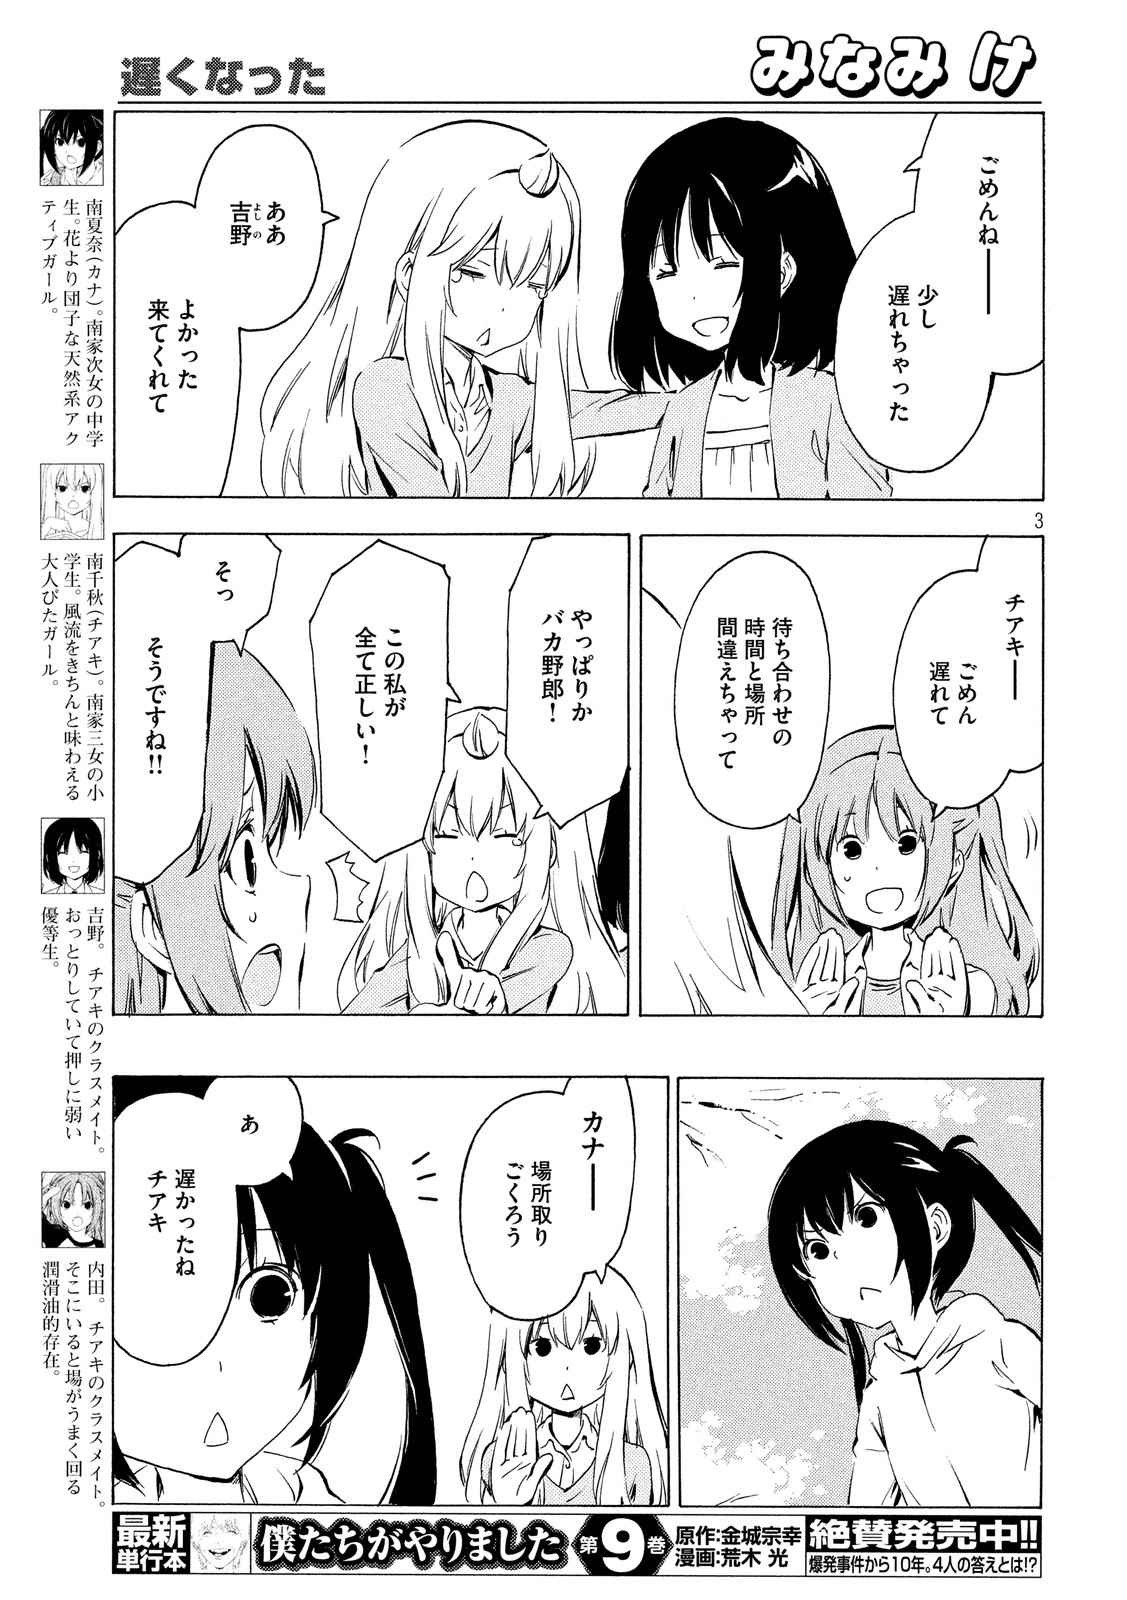 Minami-ke - Chapter 314 - Page 3